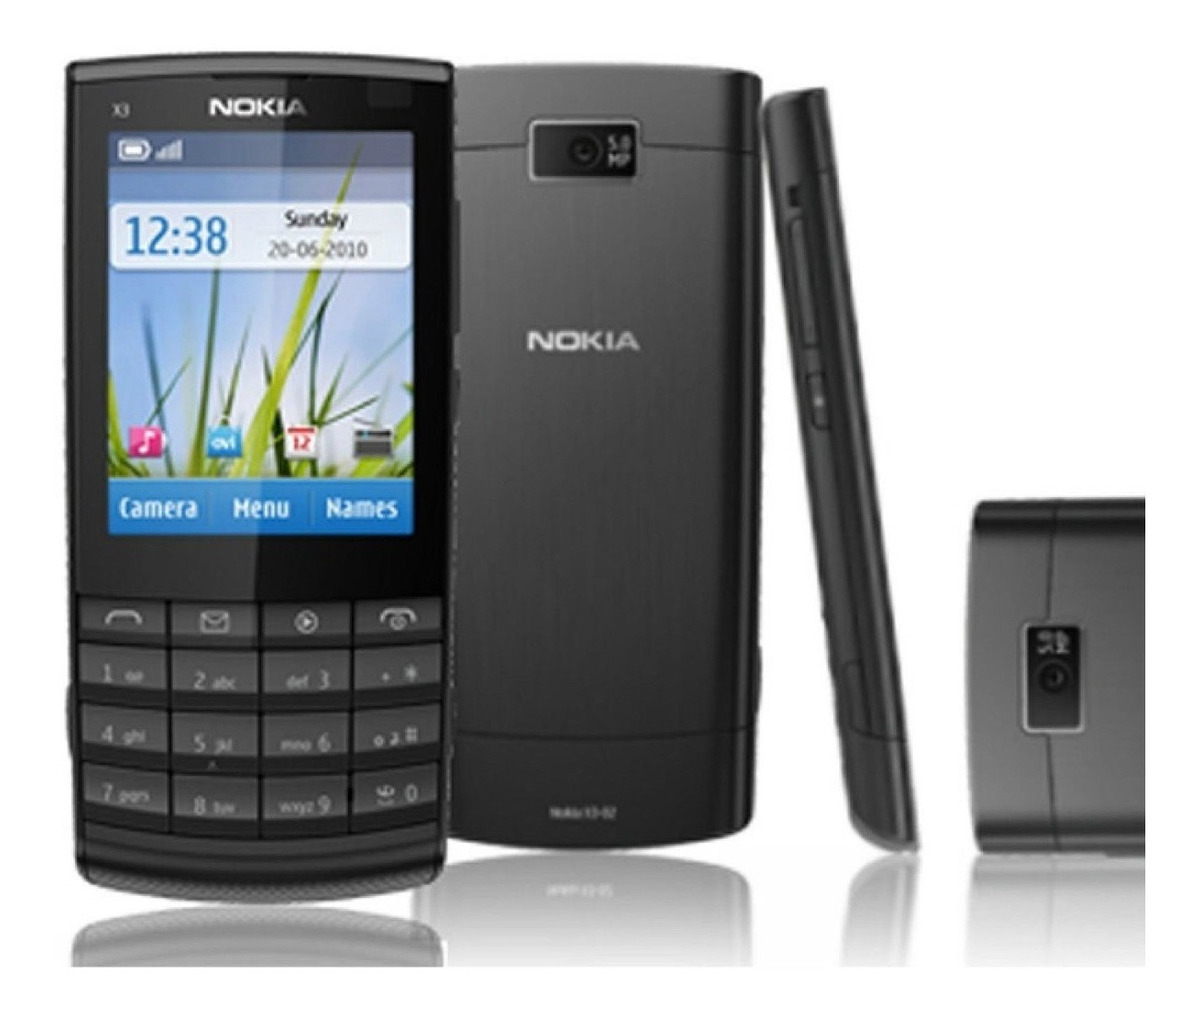 Nokia X3 02 Touch Gsm Telefono Celular U S 120 00 en 